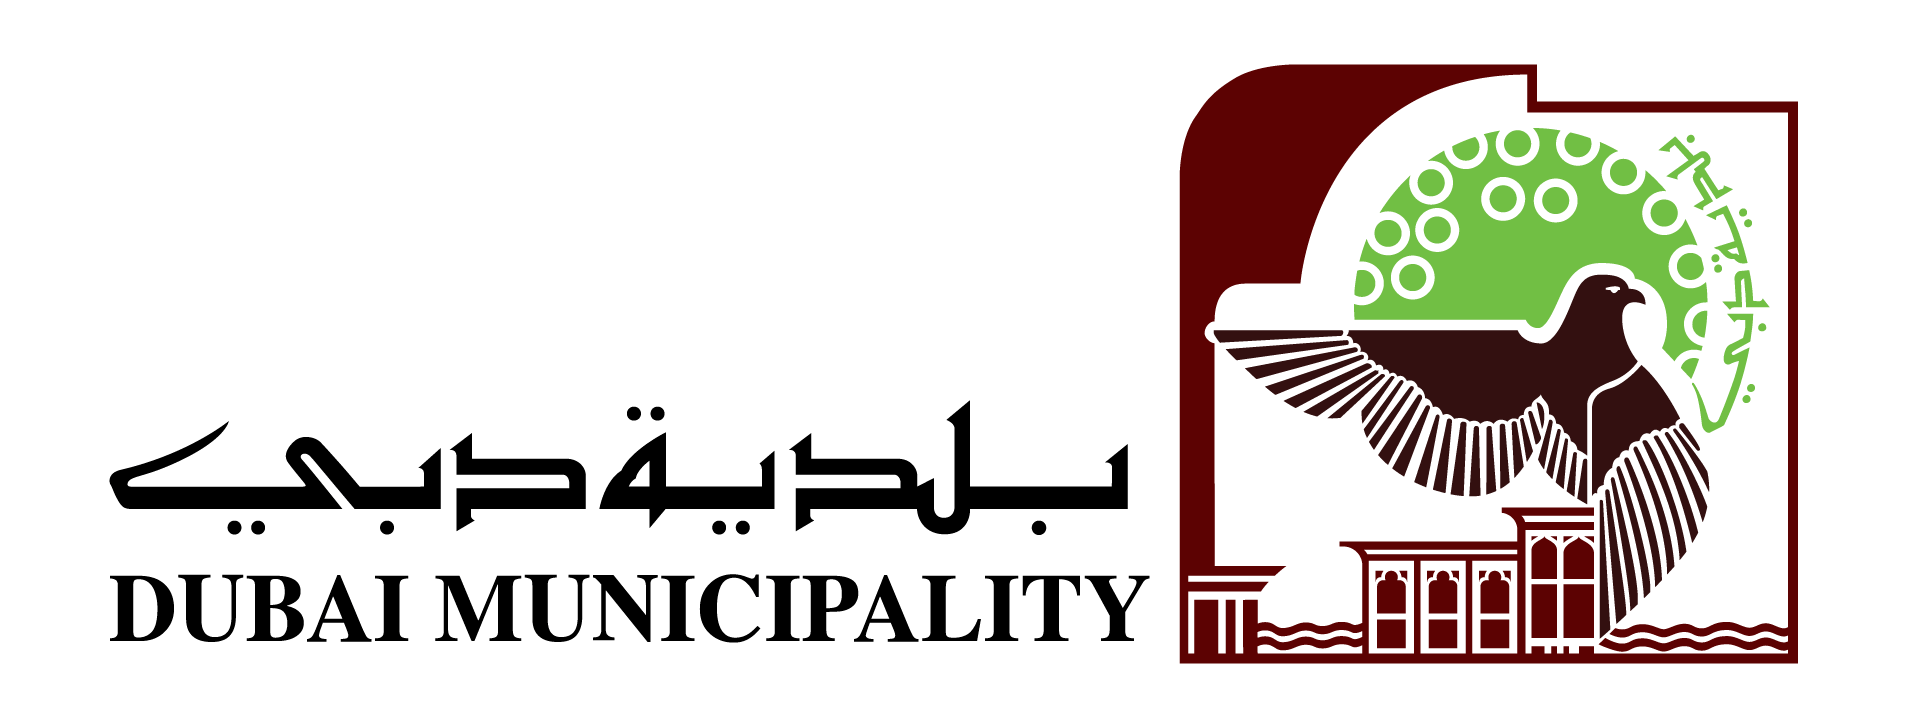 DM Dubai Municipality